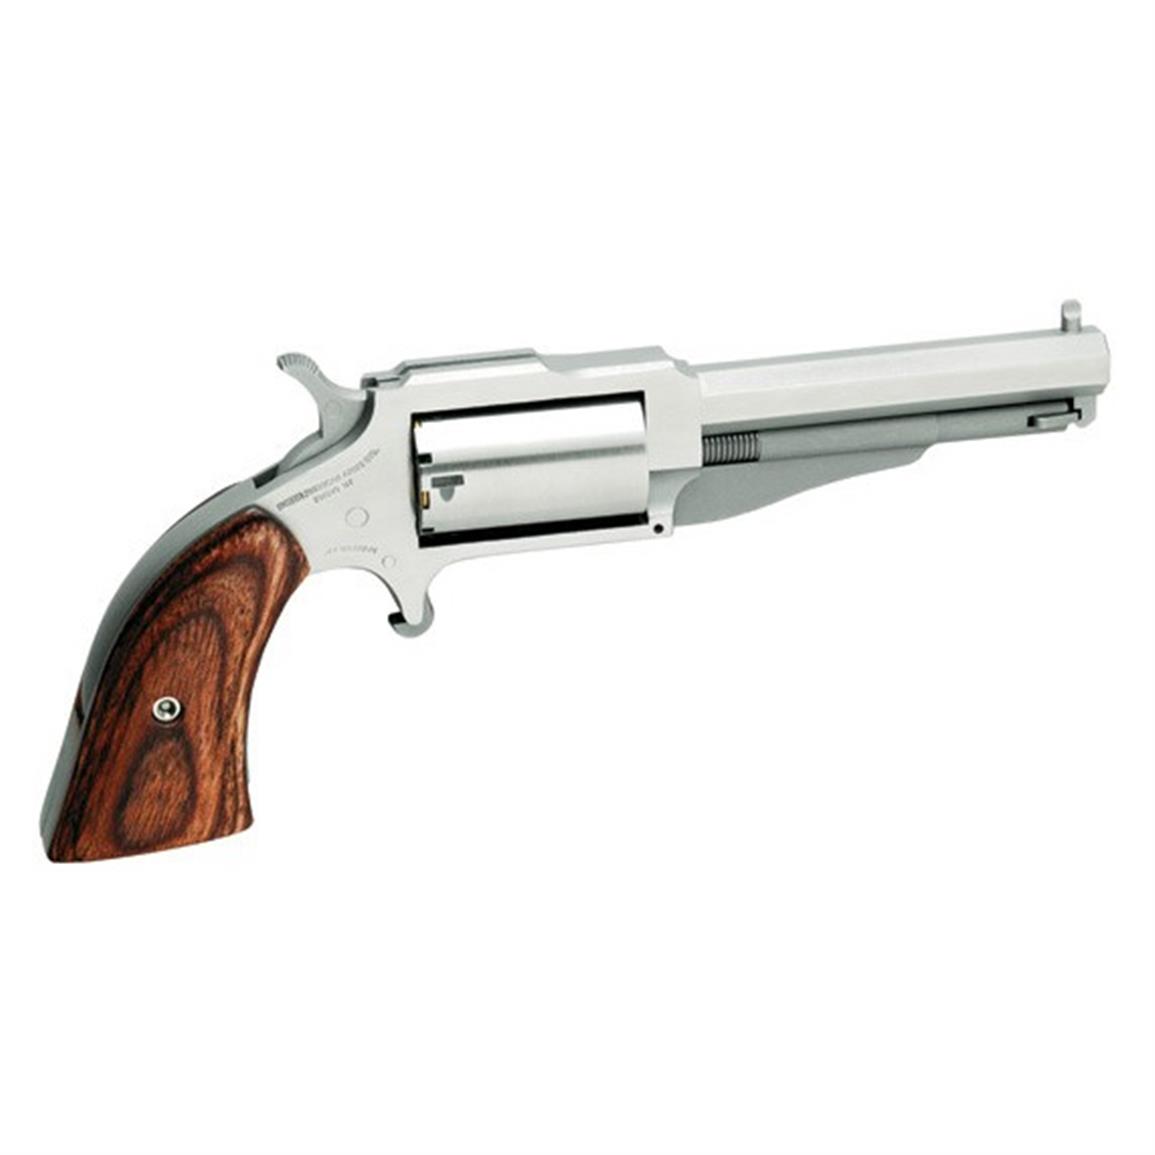 NAA 1860 The Earl, Revolver, .22 Magnum, Rimfire, 18603C, 744253001970, 3 inch Barrel